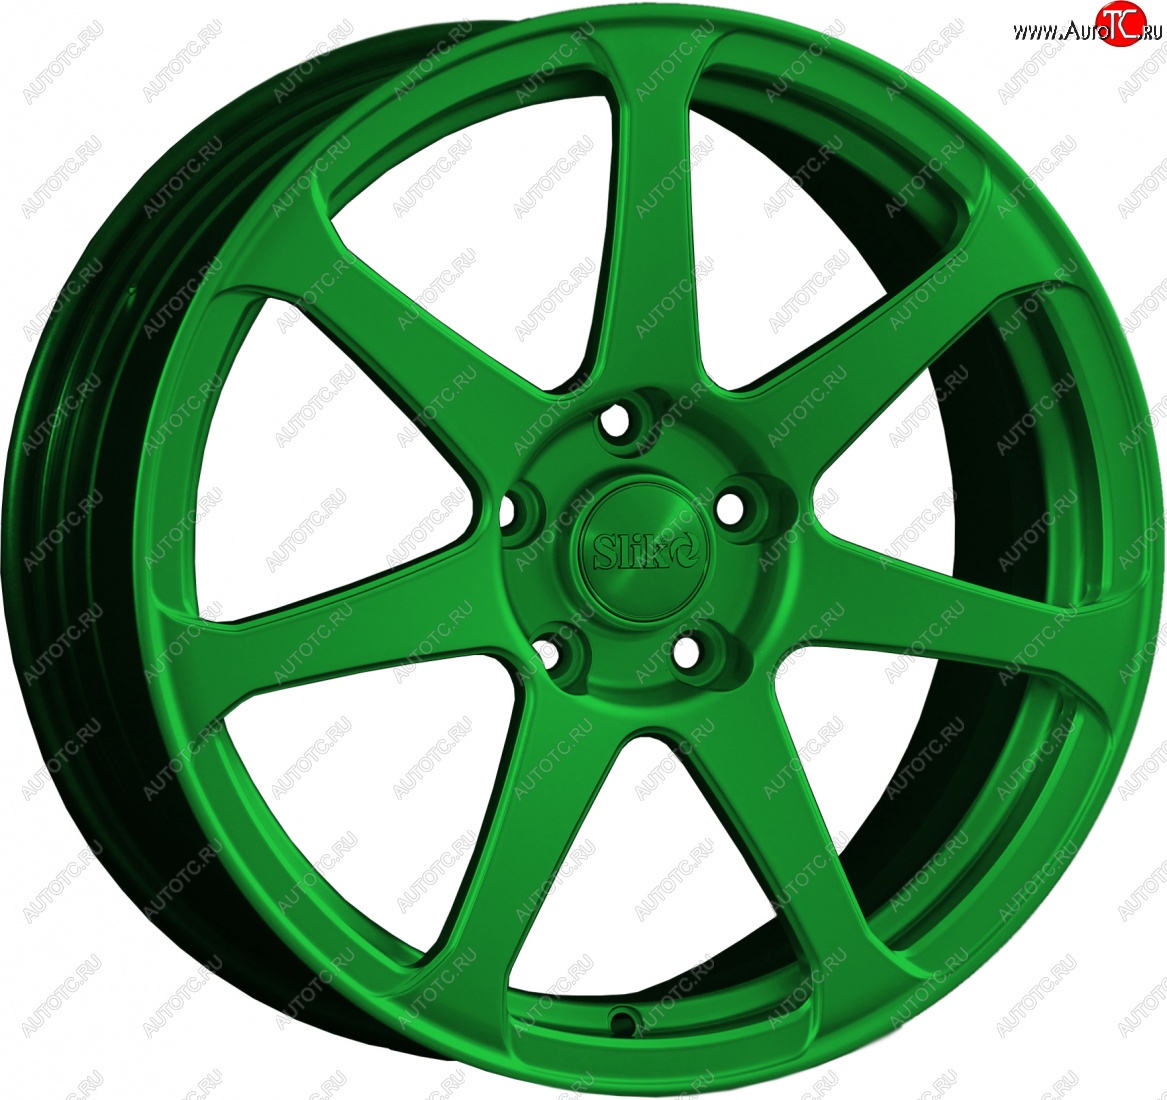 14 499 р. Кованый диск Slik classik R17x7.5 Зеленый (GREEN) 7.5x17 Chevrolet Lanos T100 седан (2002-2017) 4x100.0xDIA56.6xET49.0 (Цвет: GREEN)